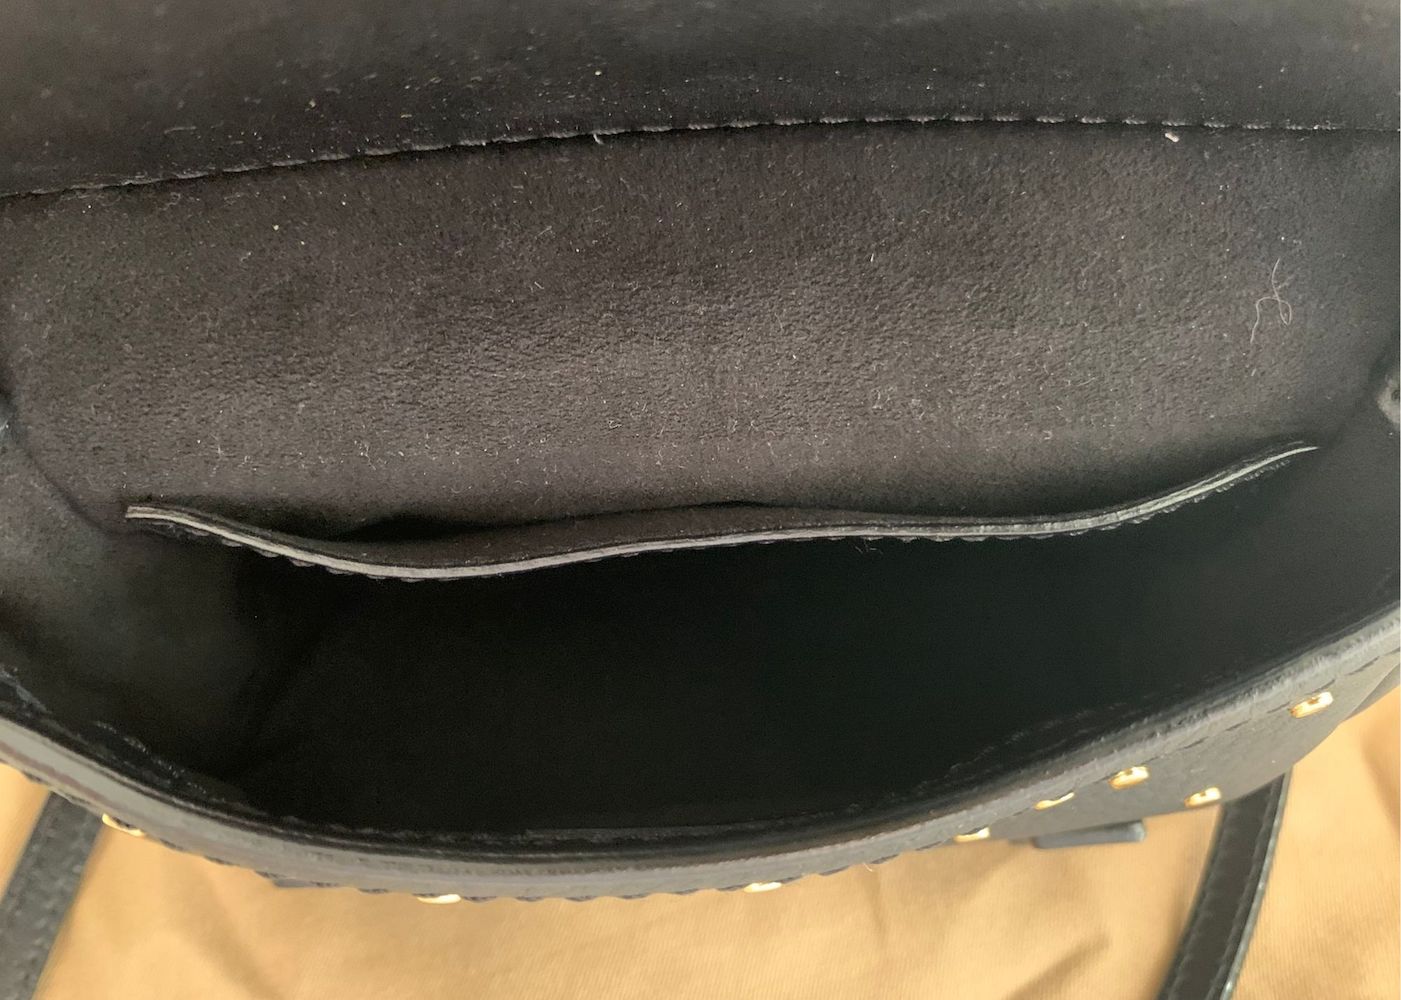 Burberry The Bridle Leather Saddle Bag